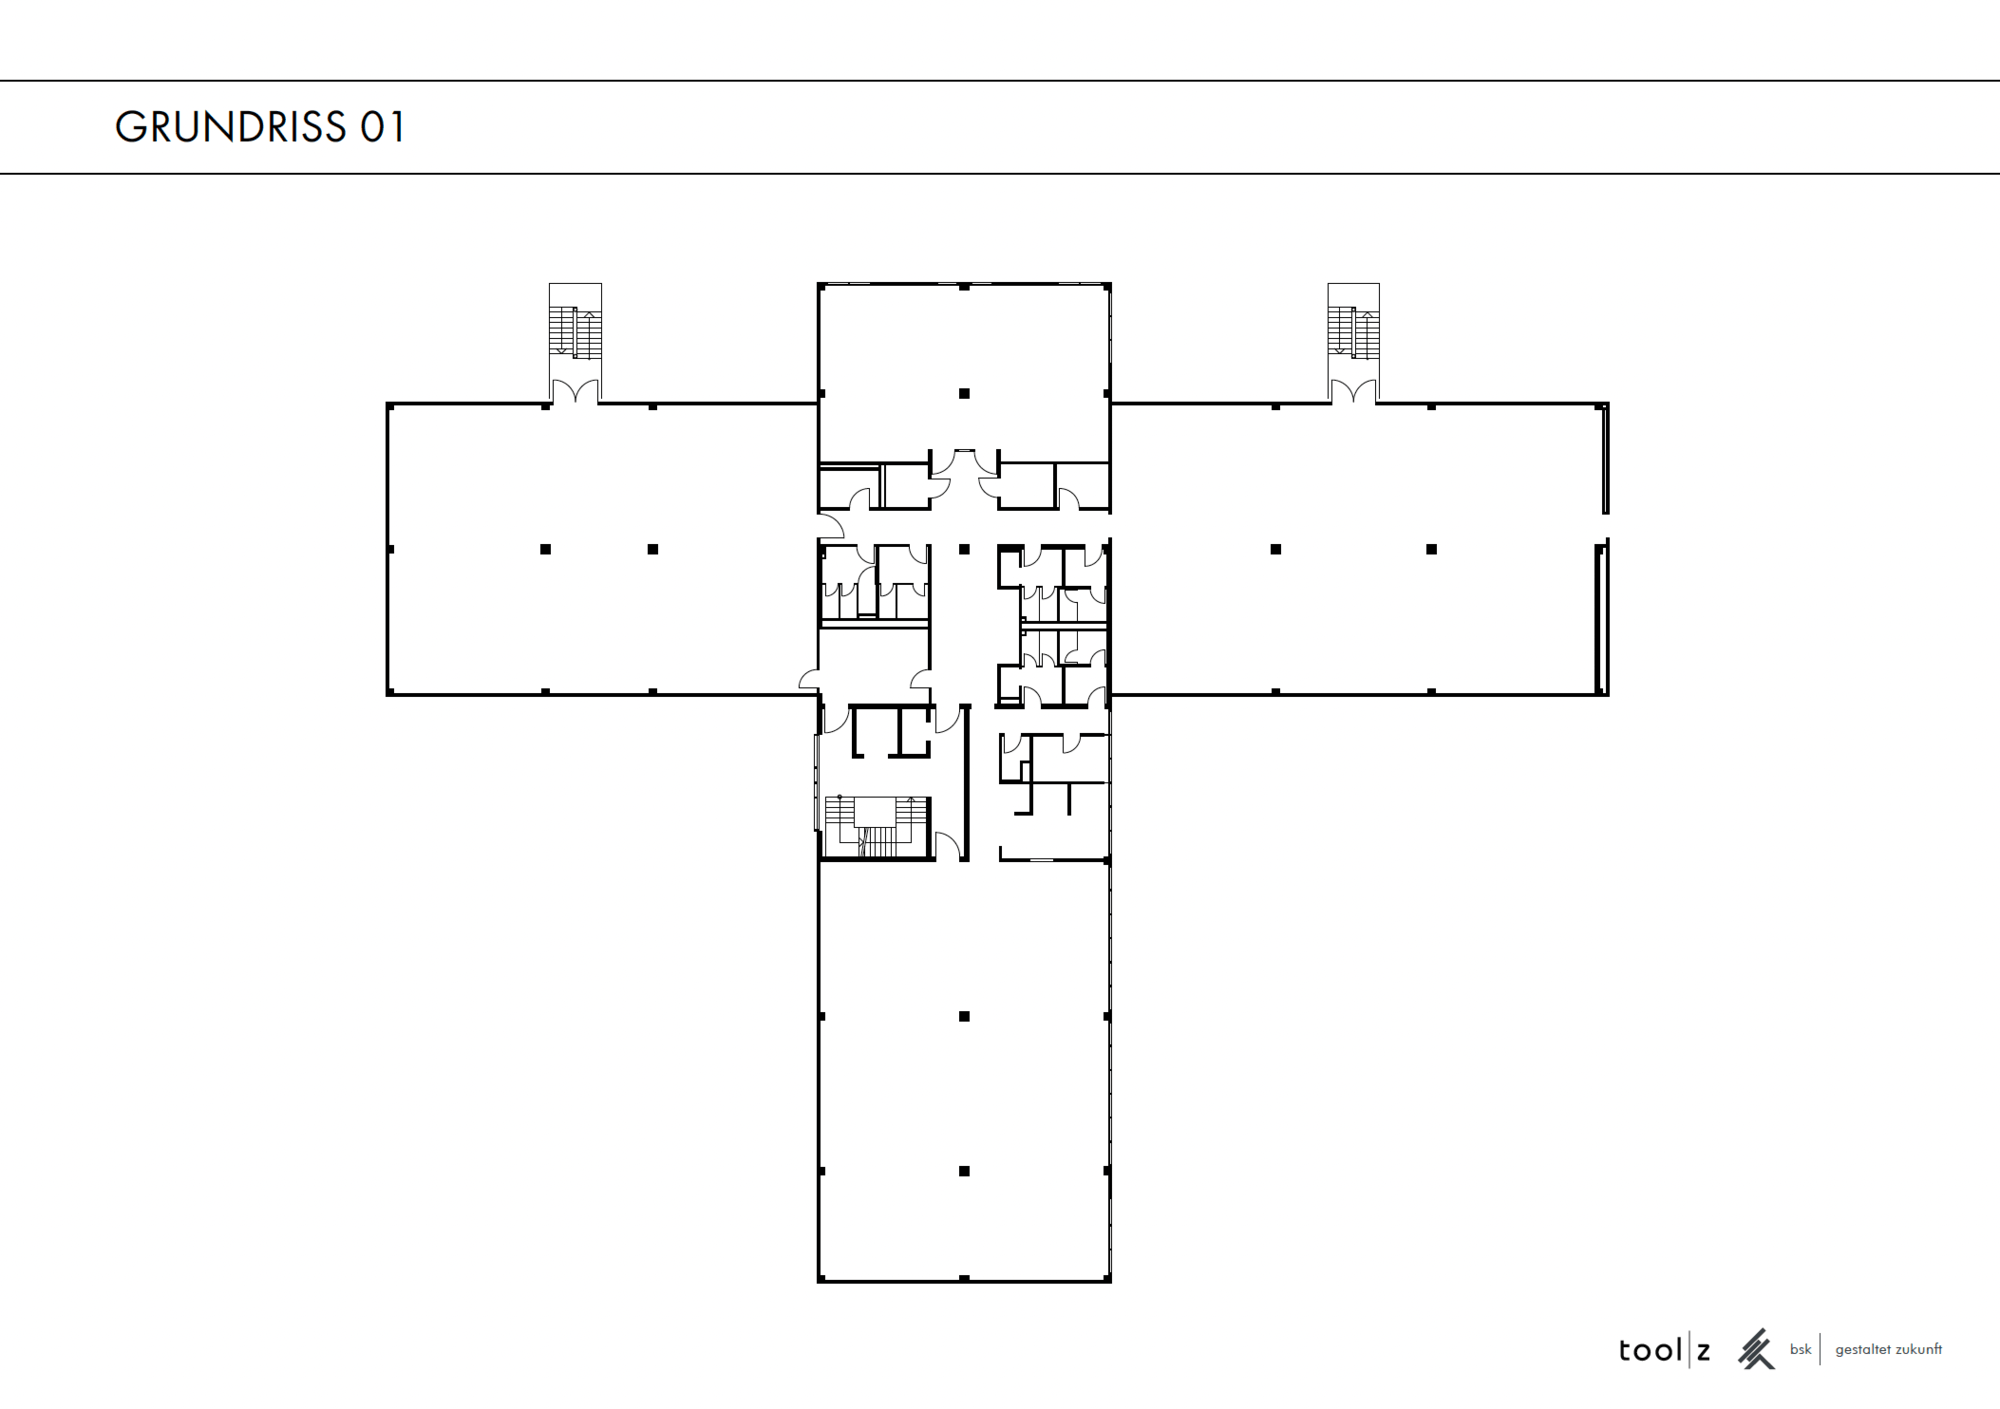 bsk-rendering-workshop-map-grundriss-01